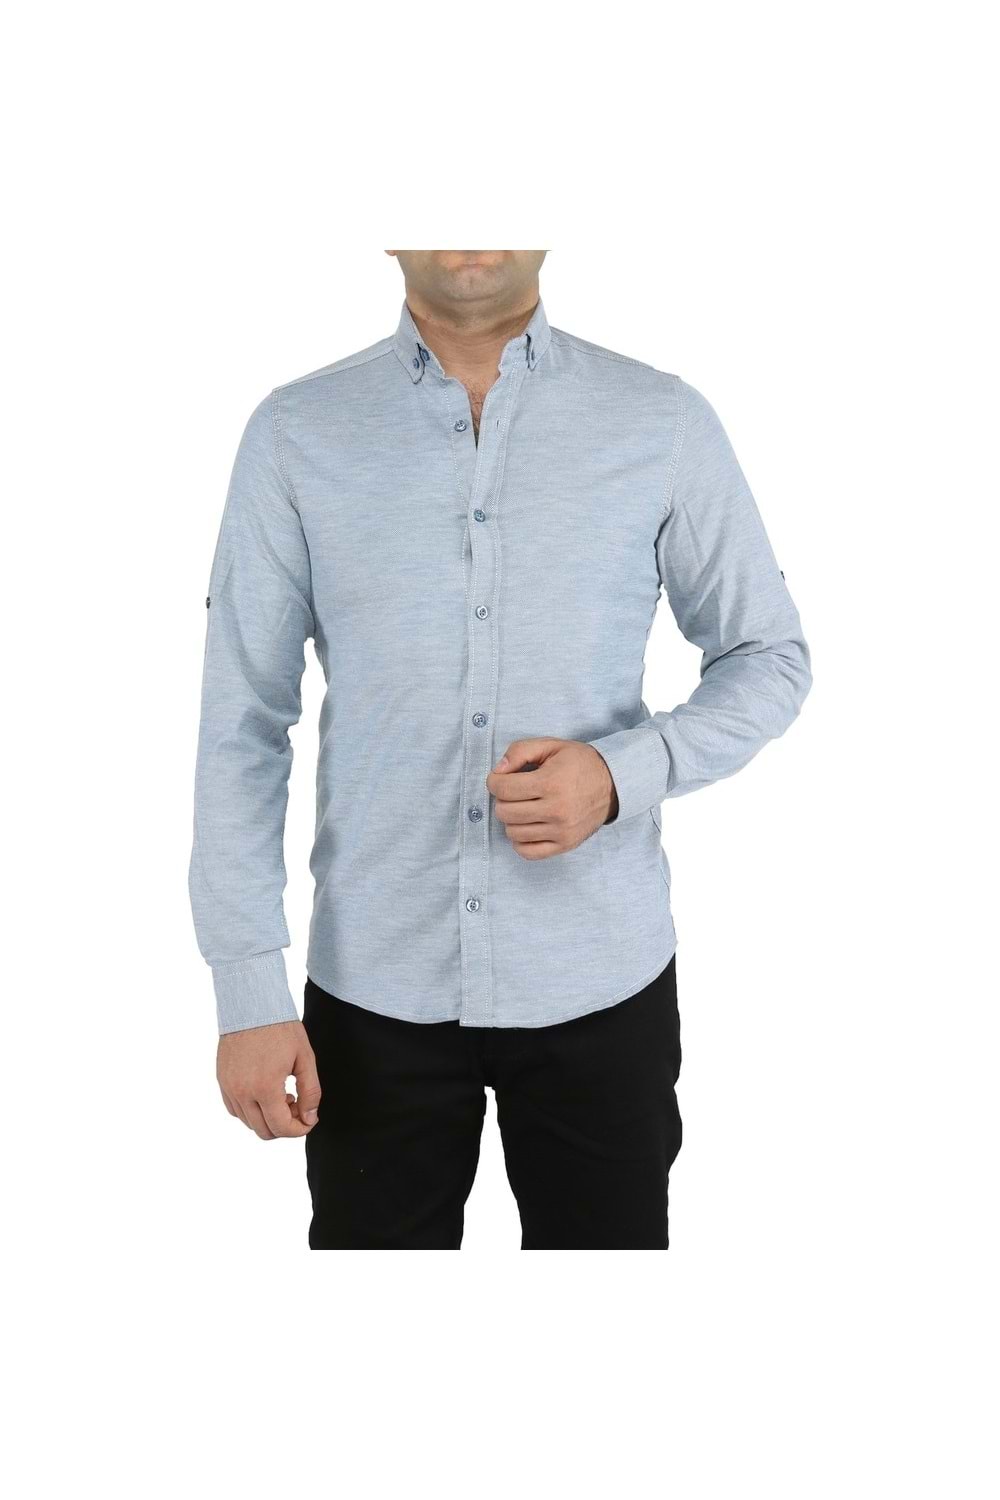 Jlt Erkek Oxford Licralı Slim Gömlek J-0729 - Mavi - M